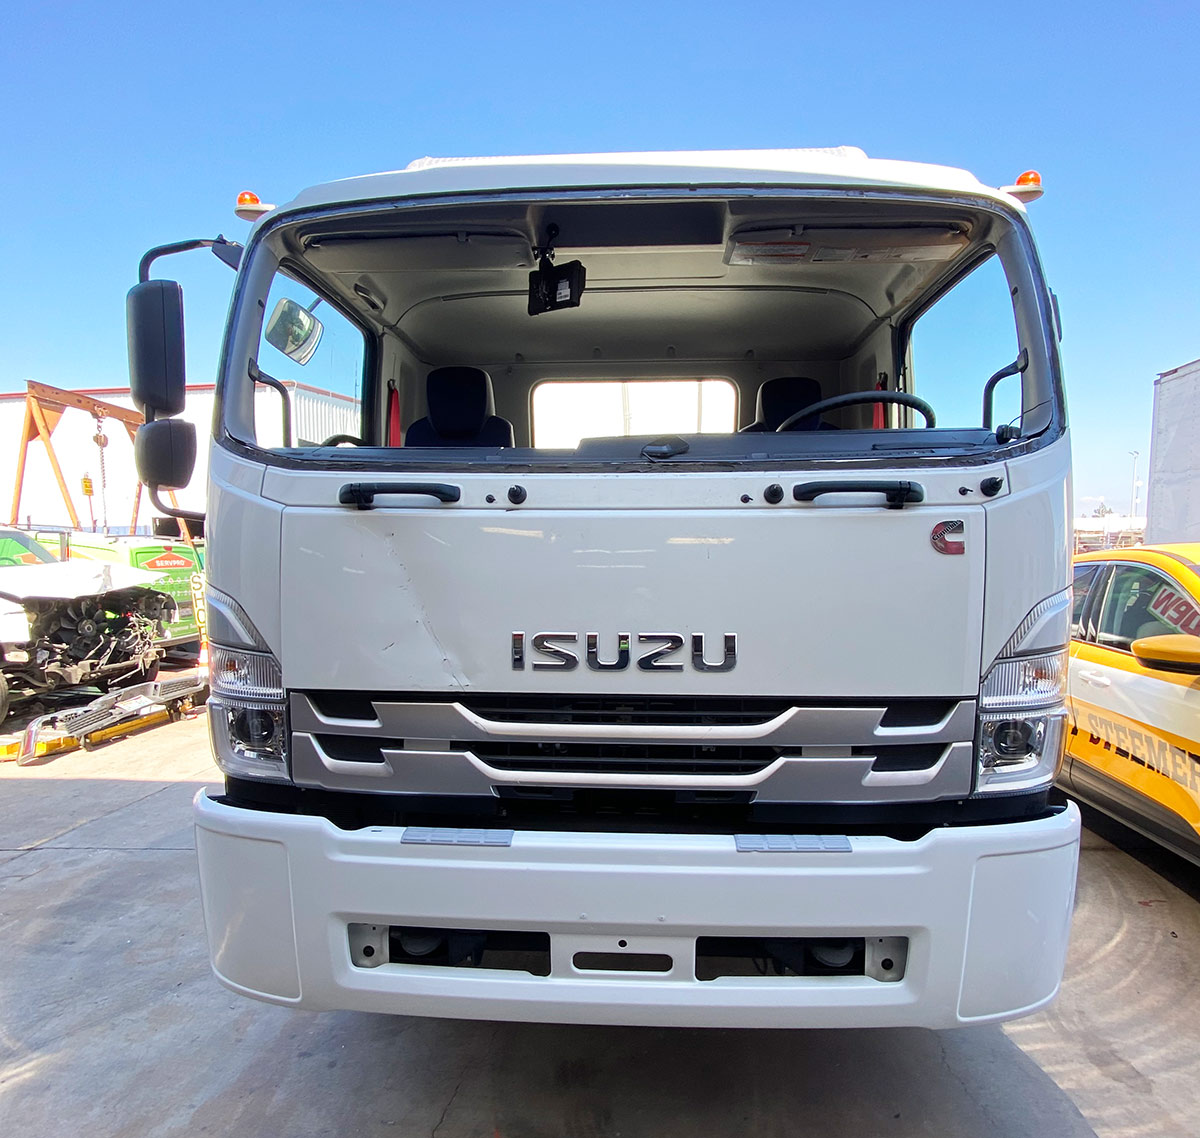 isuzu medium duty truck windshield removed